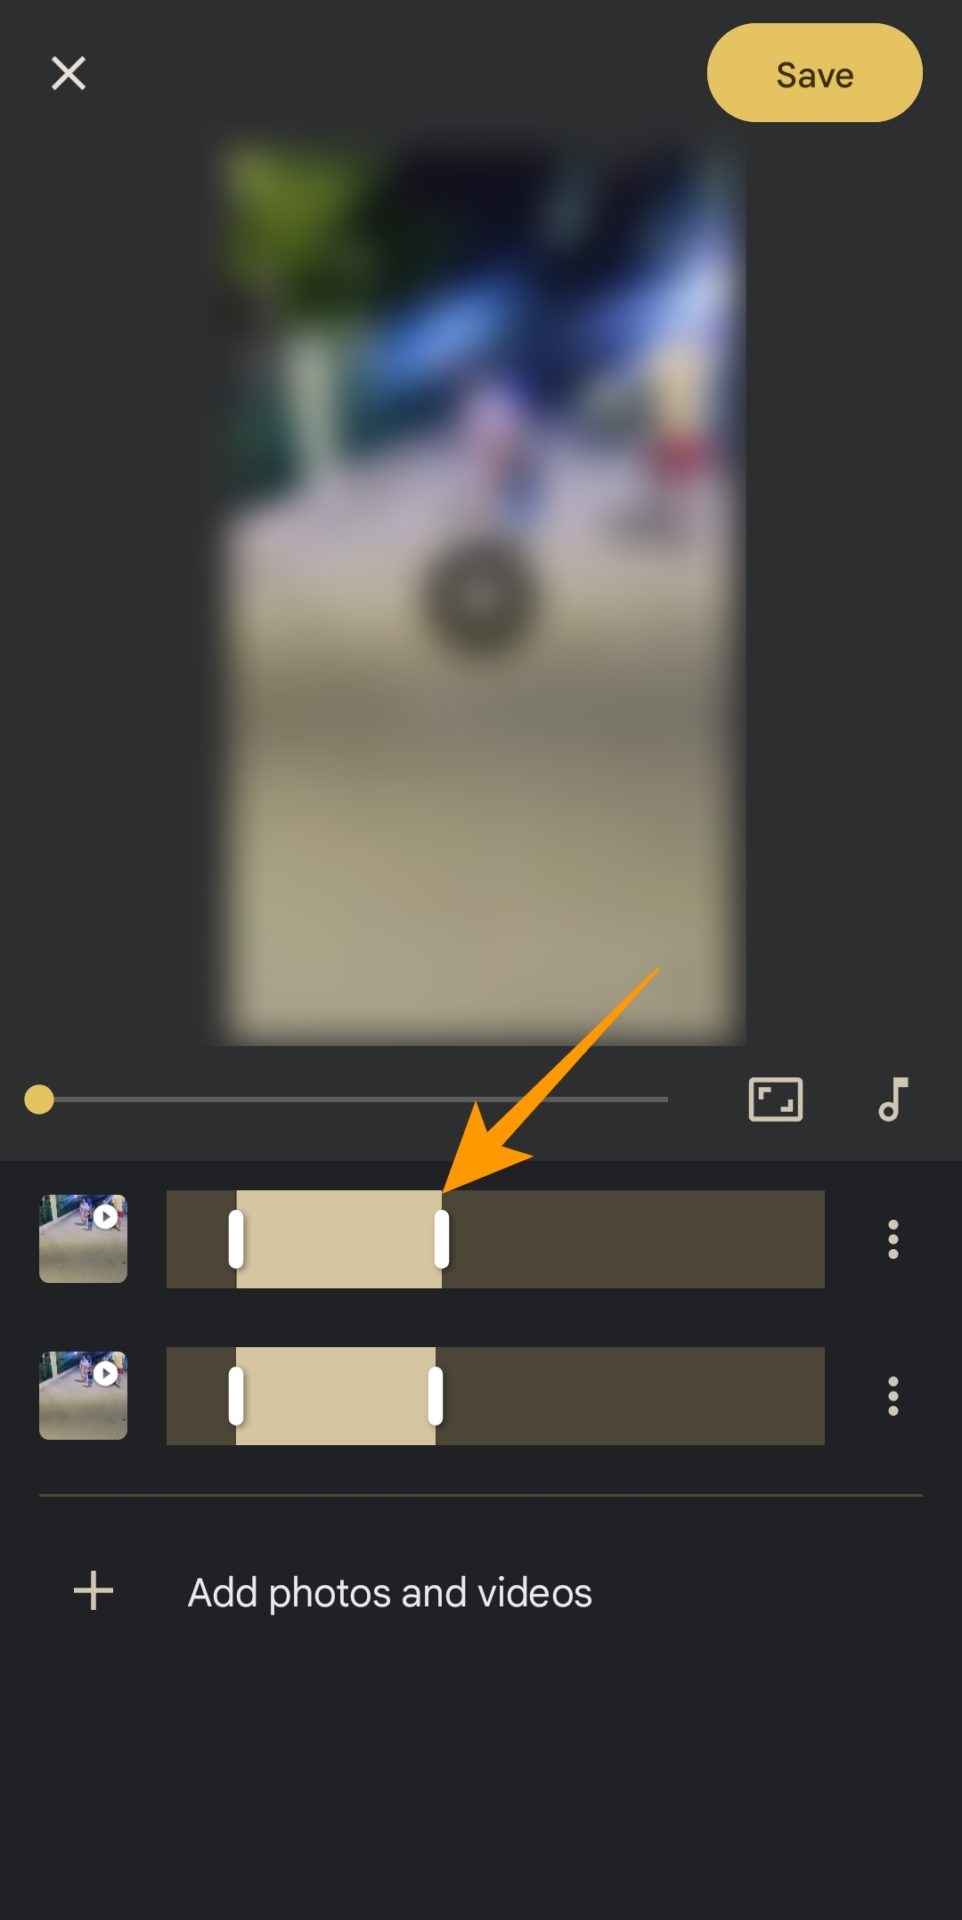 Trim video length option in Google Photos